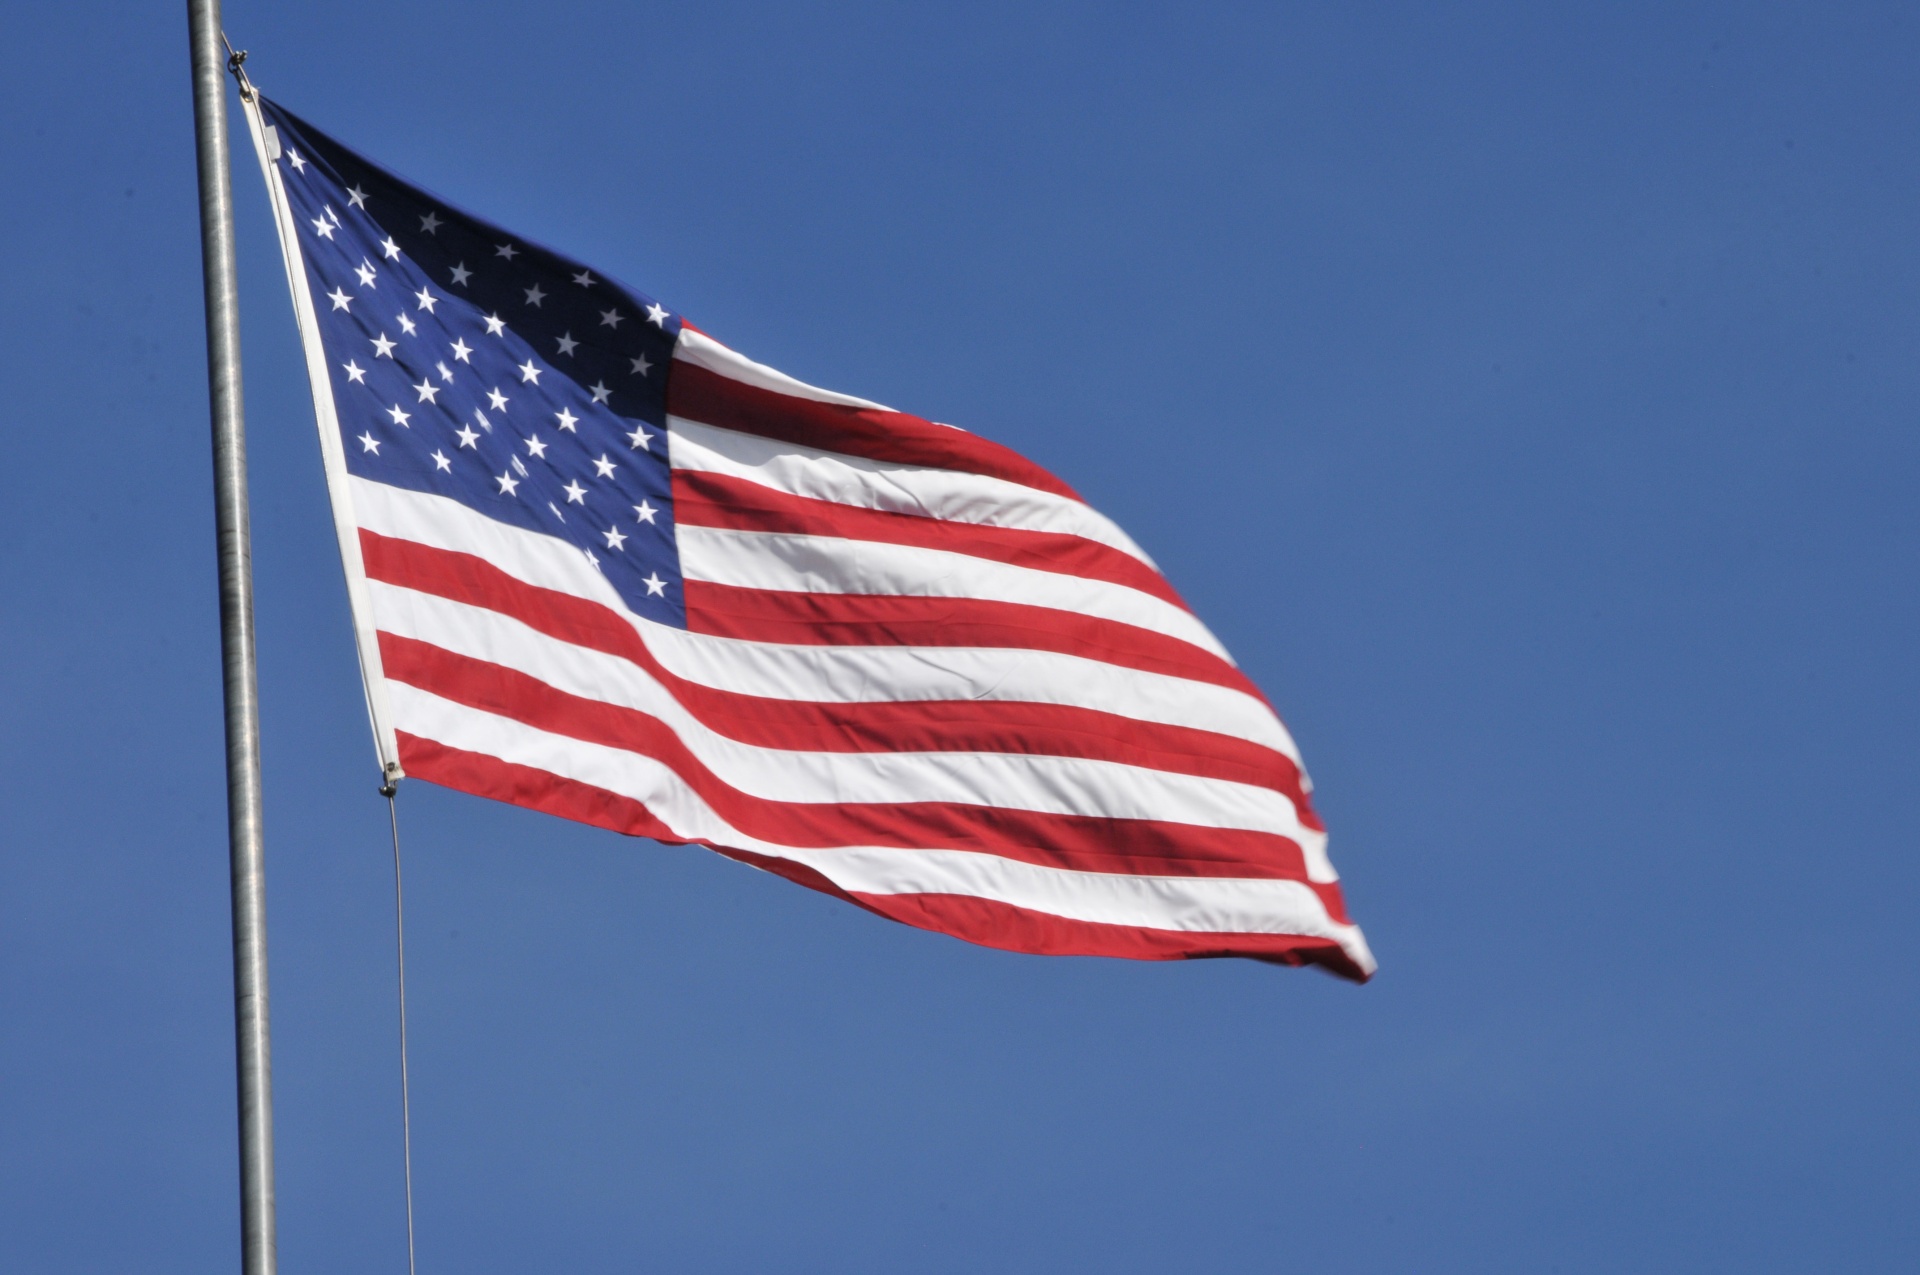 Flag American Flag Waving Flagpole Usa Free Image From Needpix Com